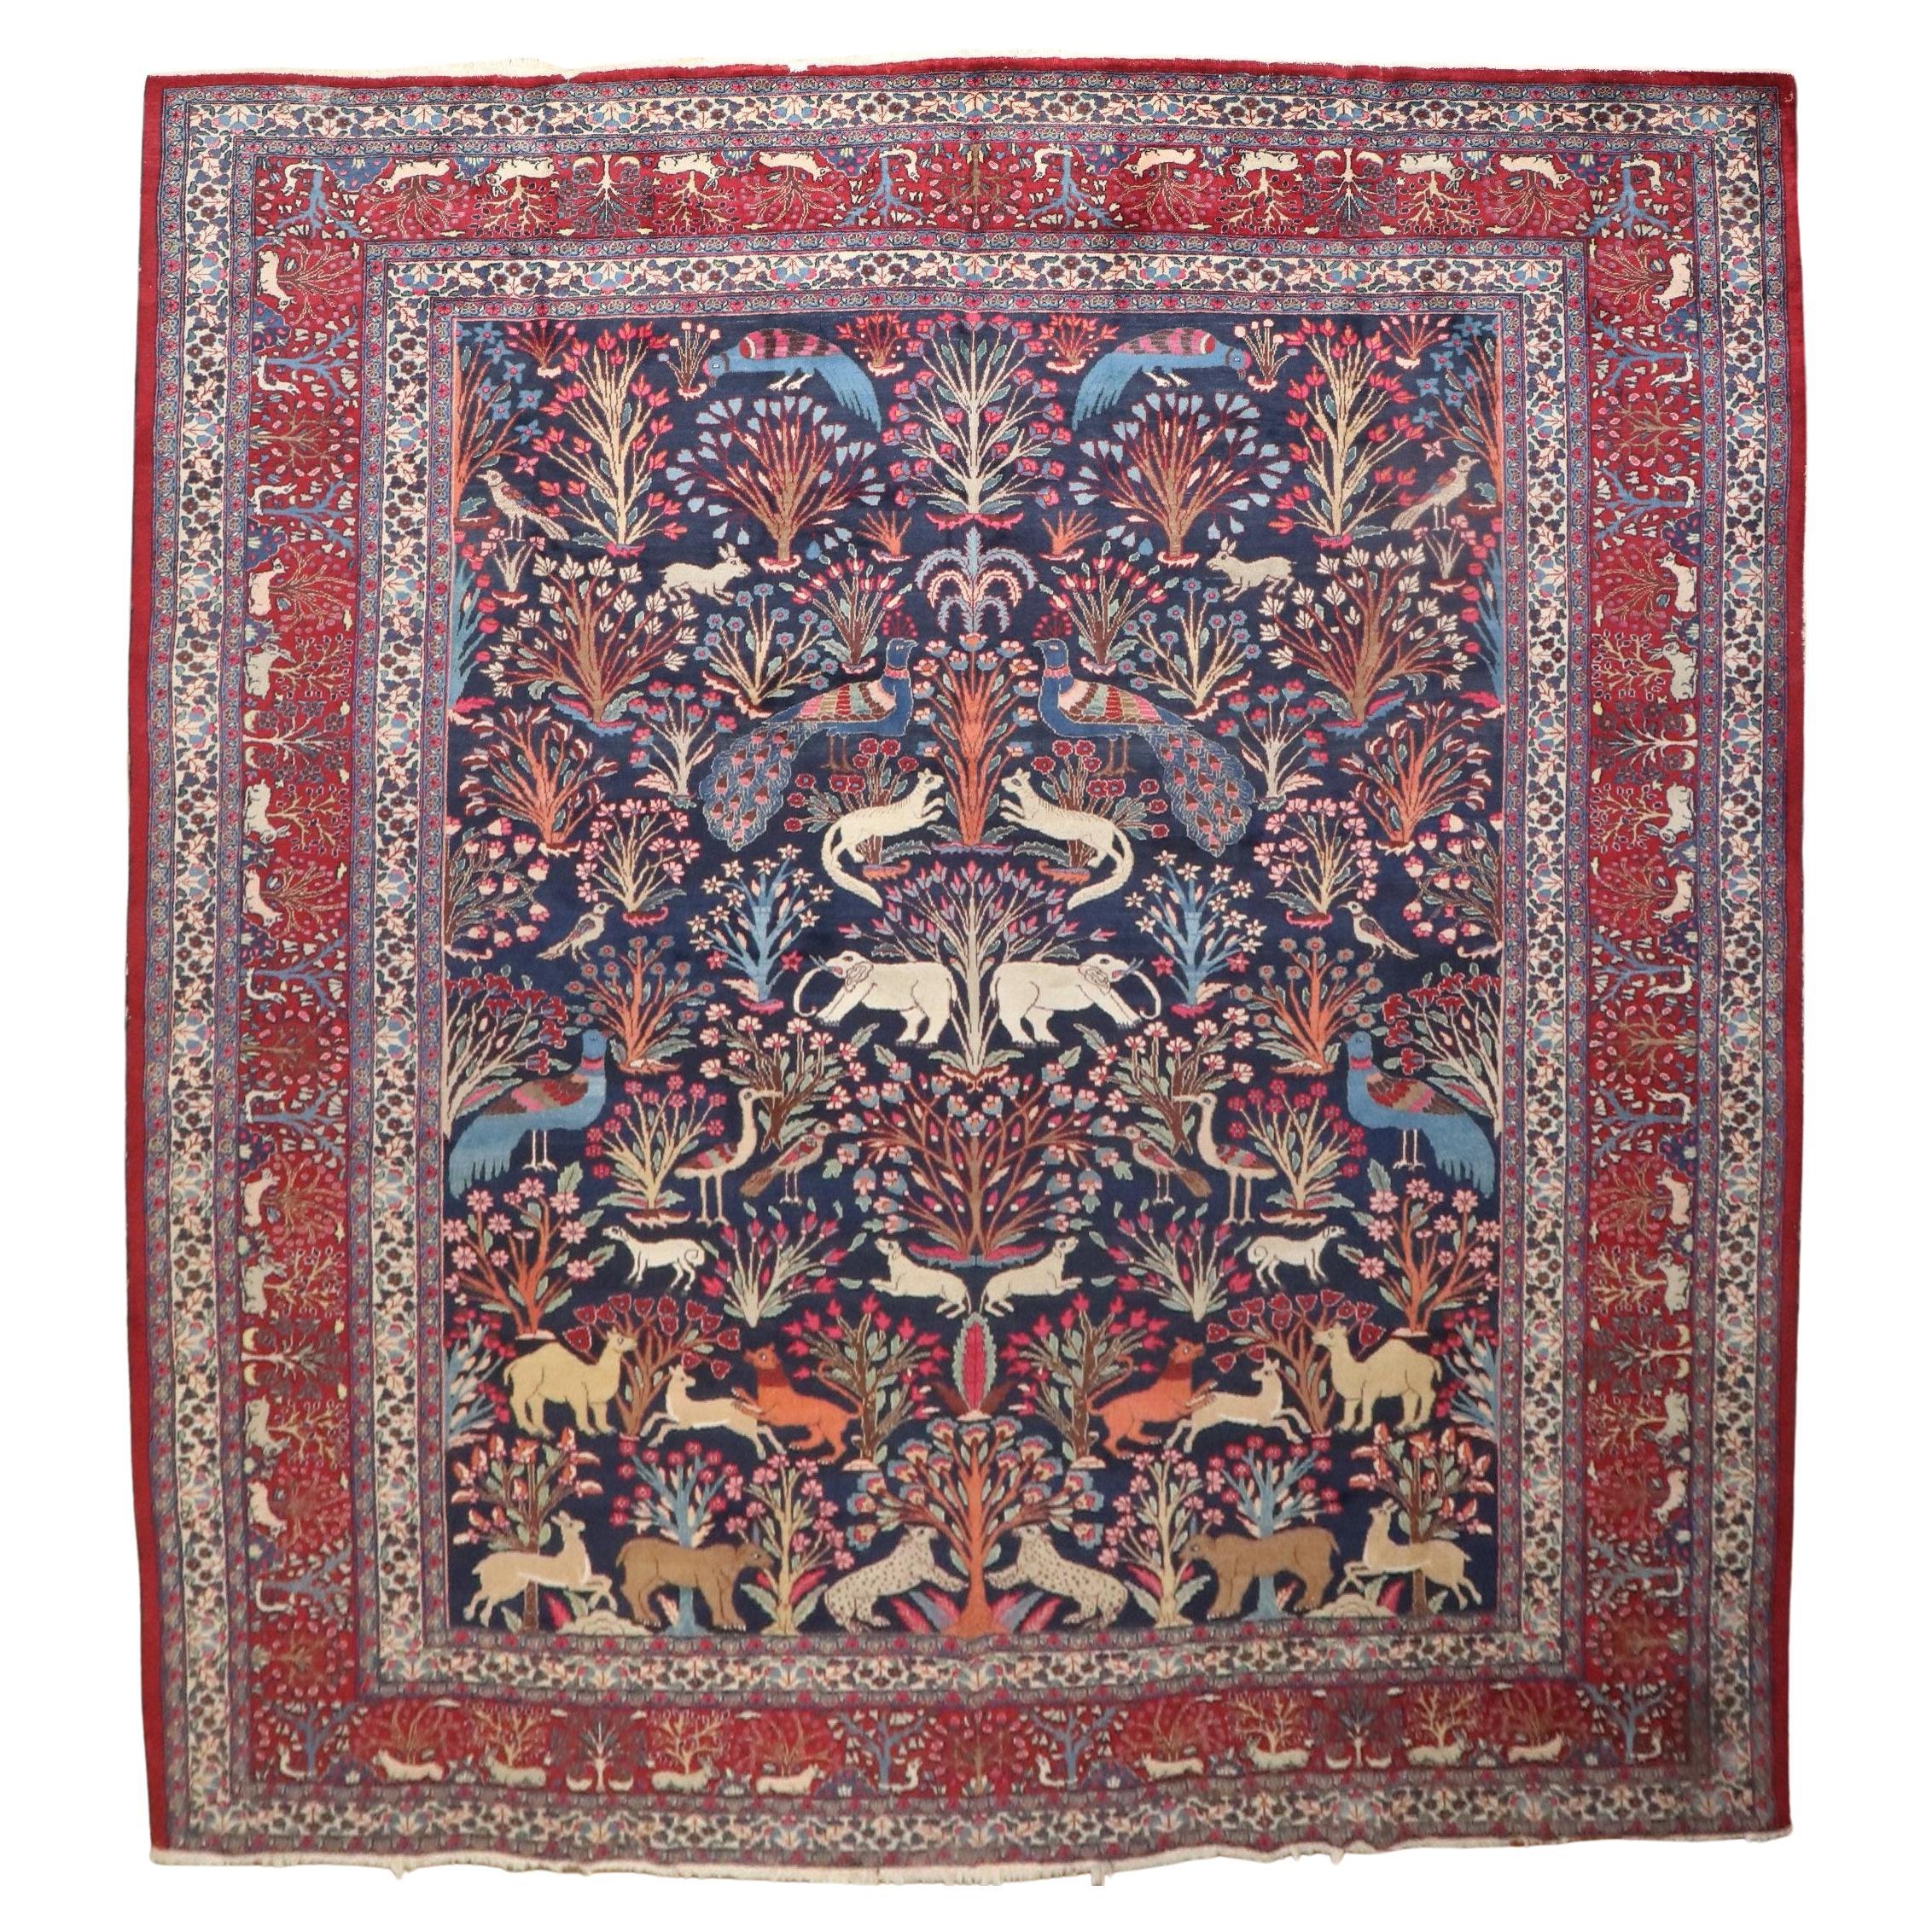 Zabihi Collection Jewel Toned Botanical Persian Meshed Animal Pictorial Rug